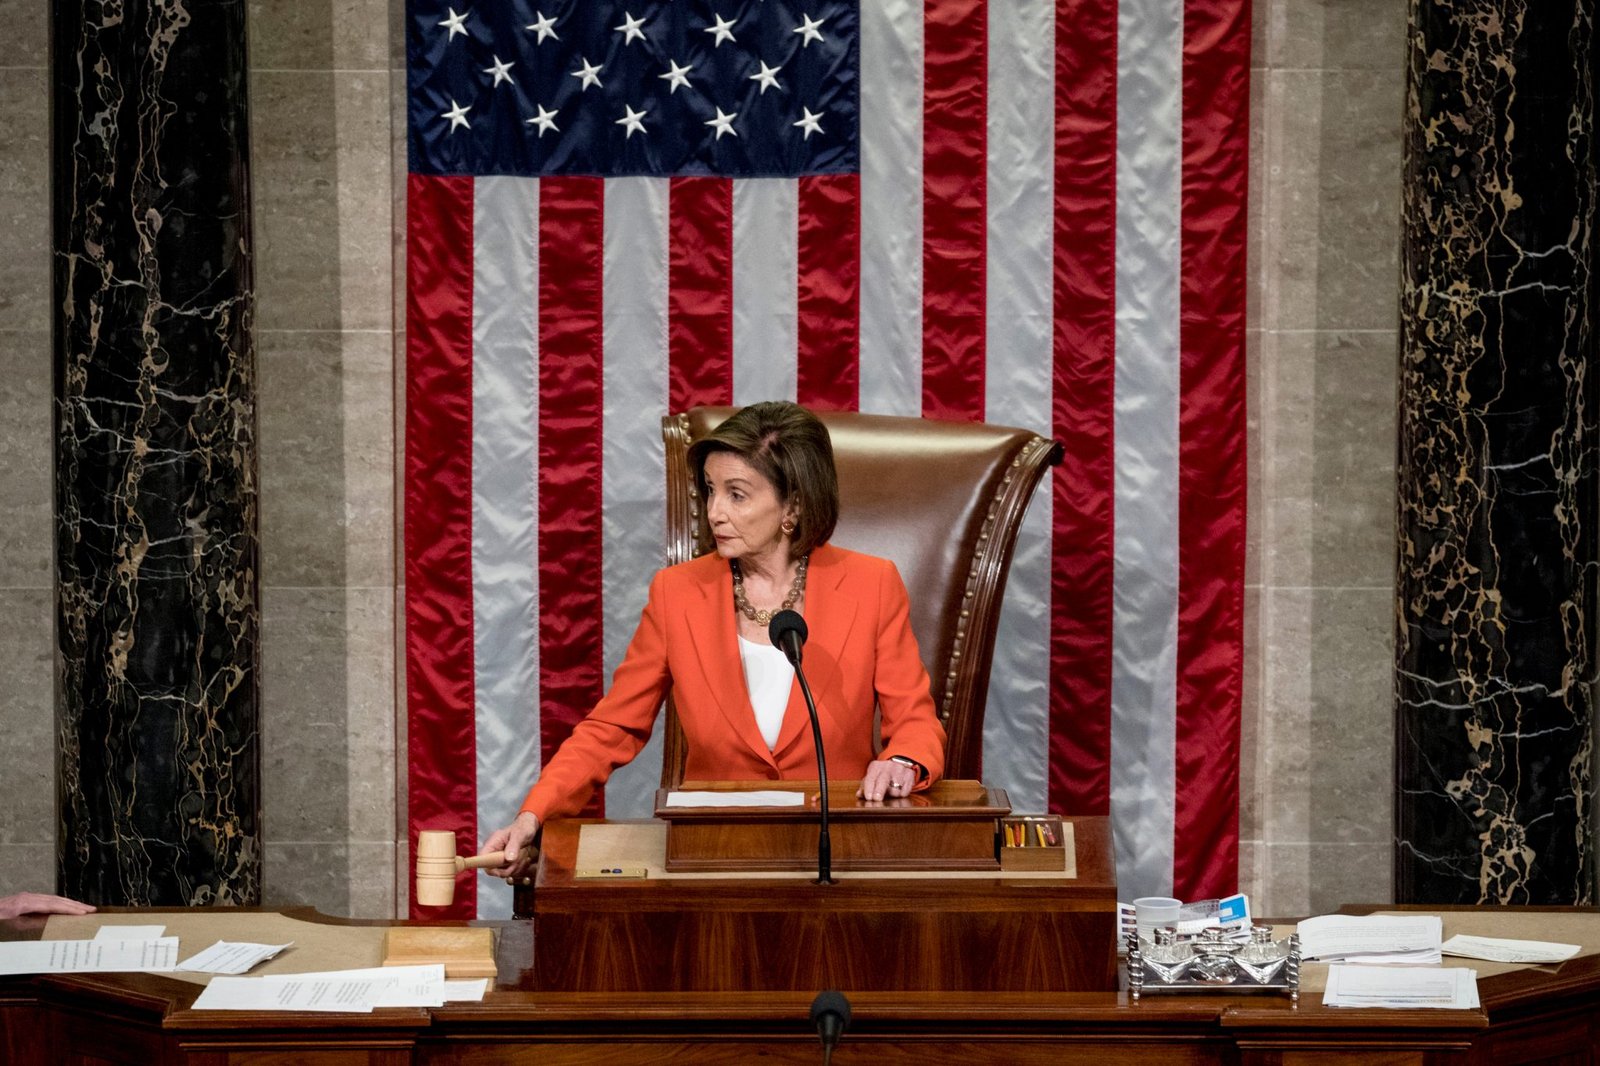 of Nancy Pelosi, the First Female Speaker of the House